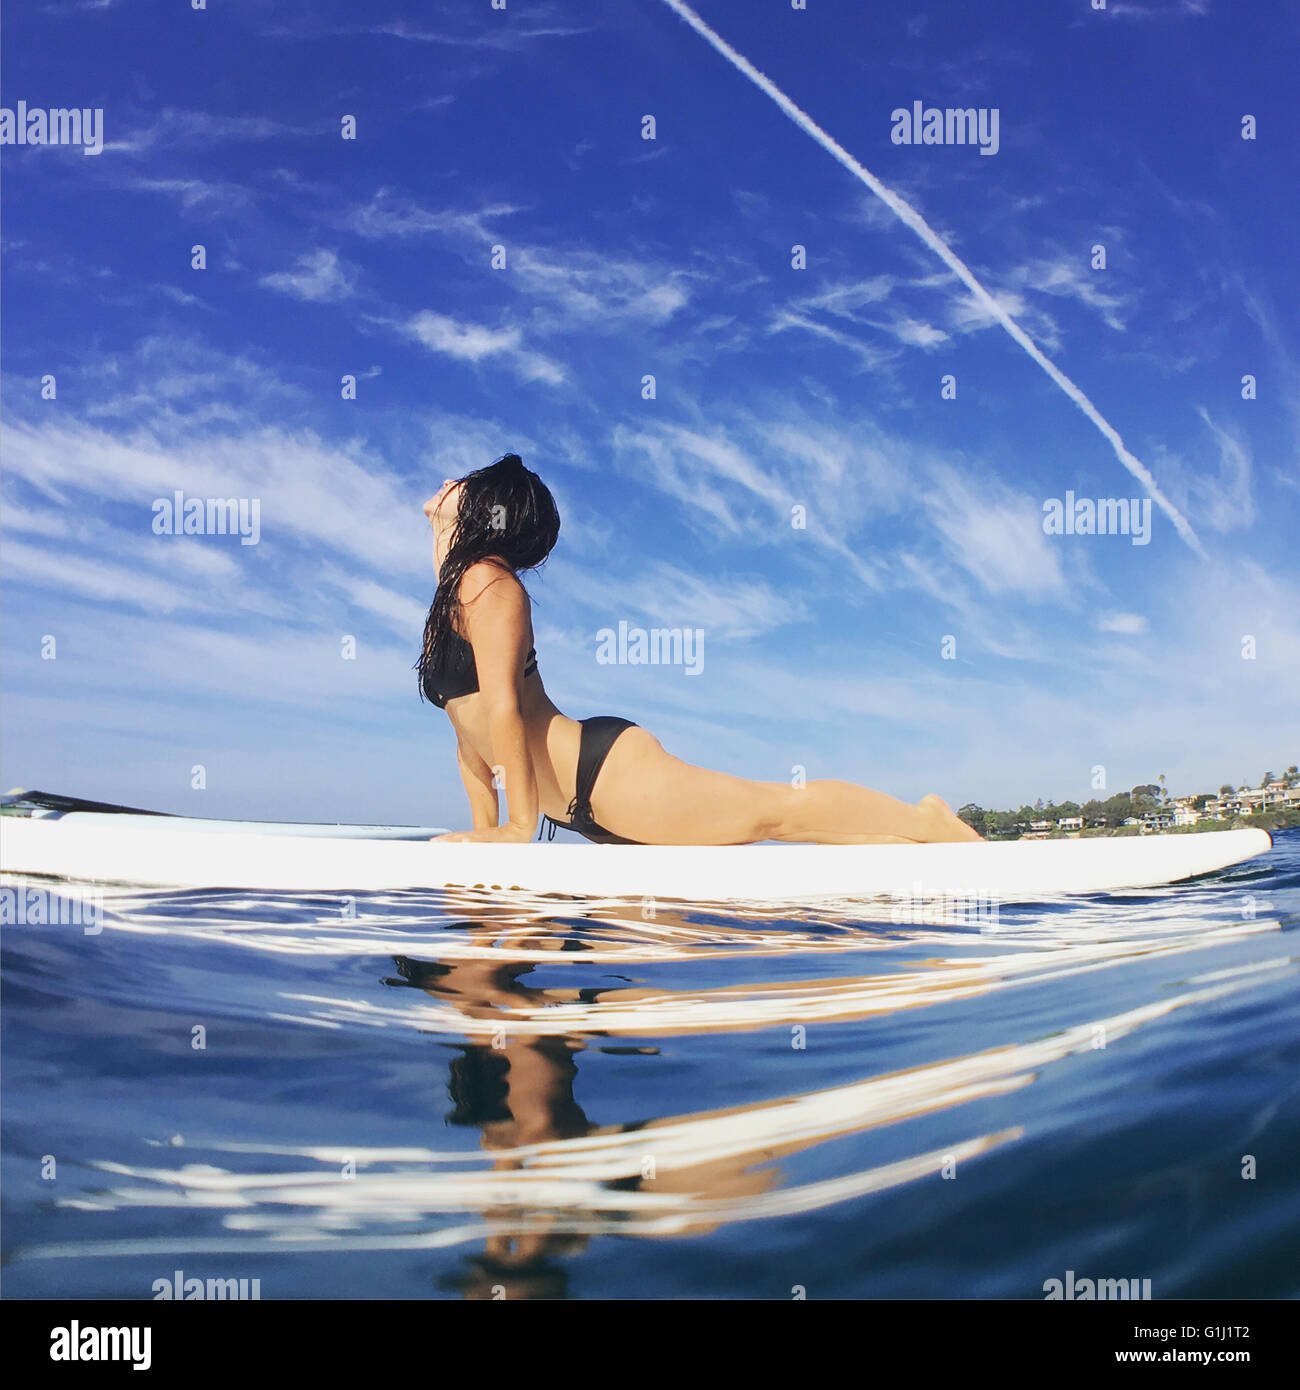 Woman doing yoga (cobra pose) on surfboard in ocean Stock Photo